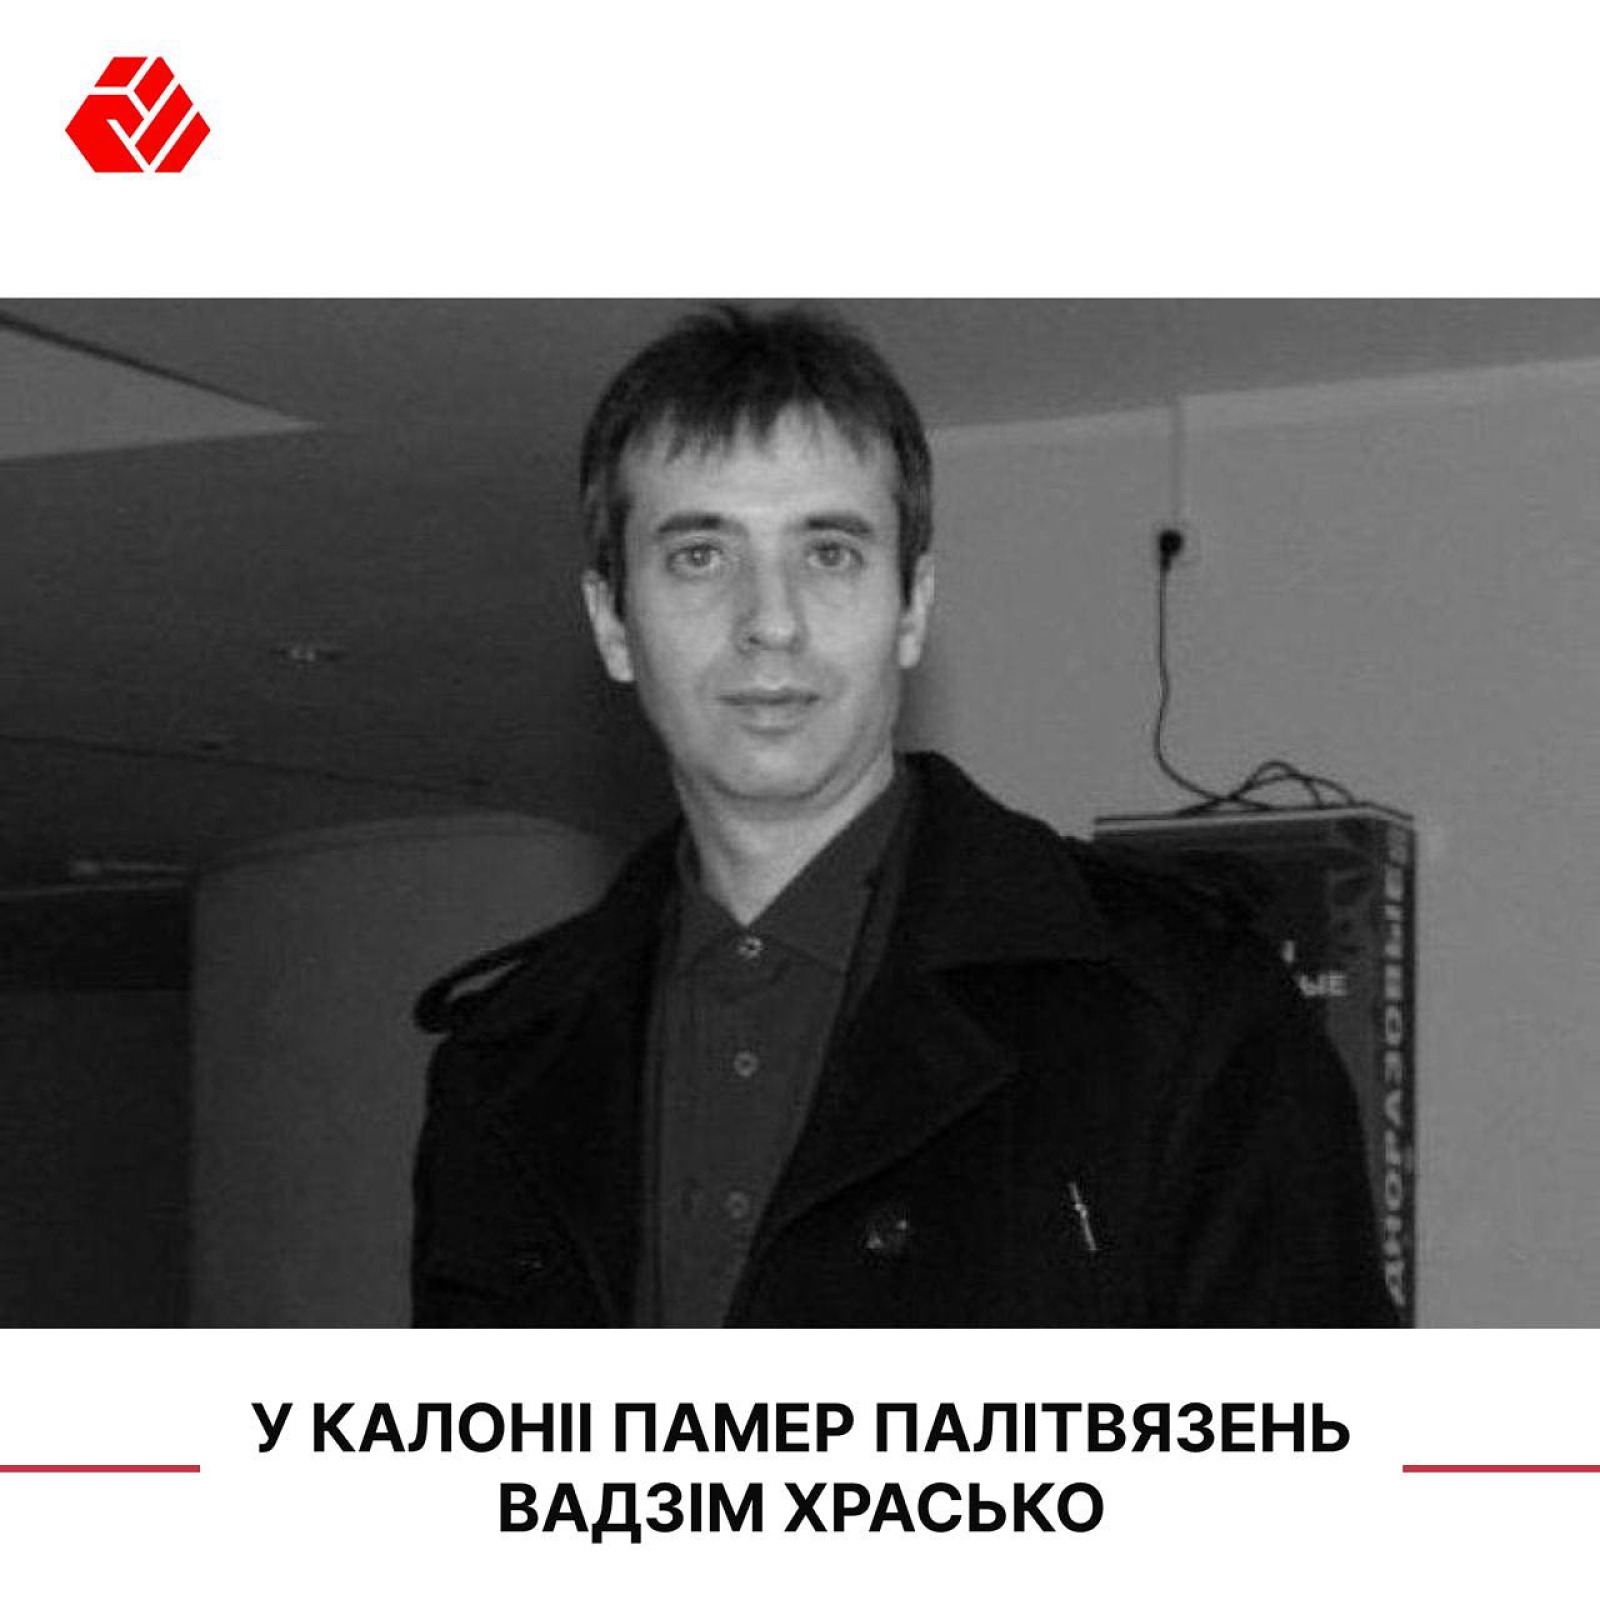 Death of Vadim Khrasko